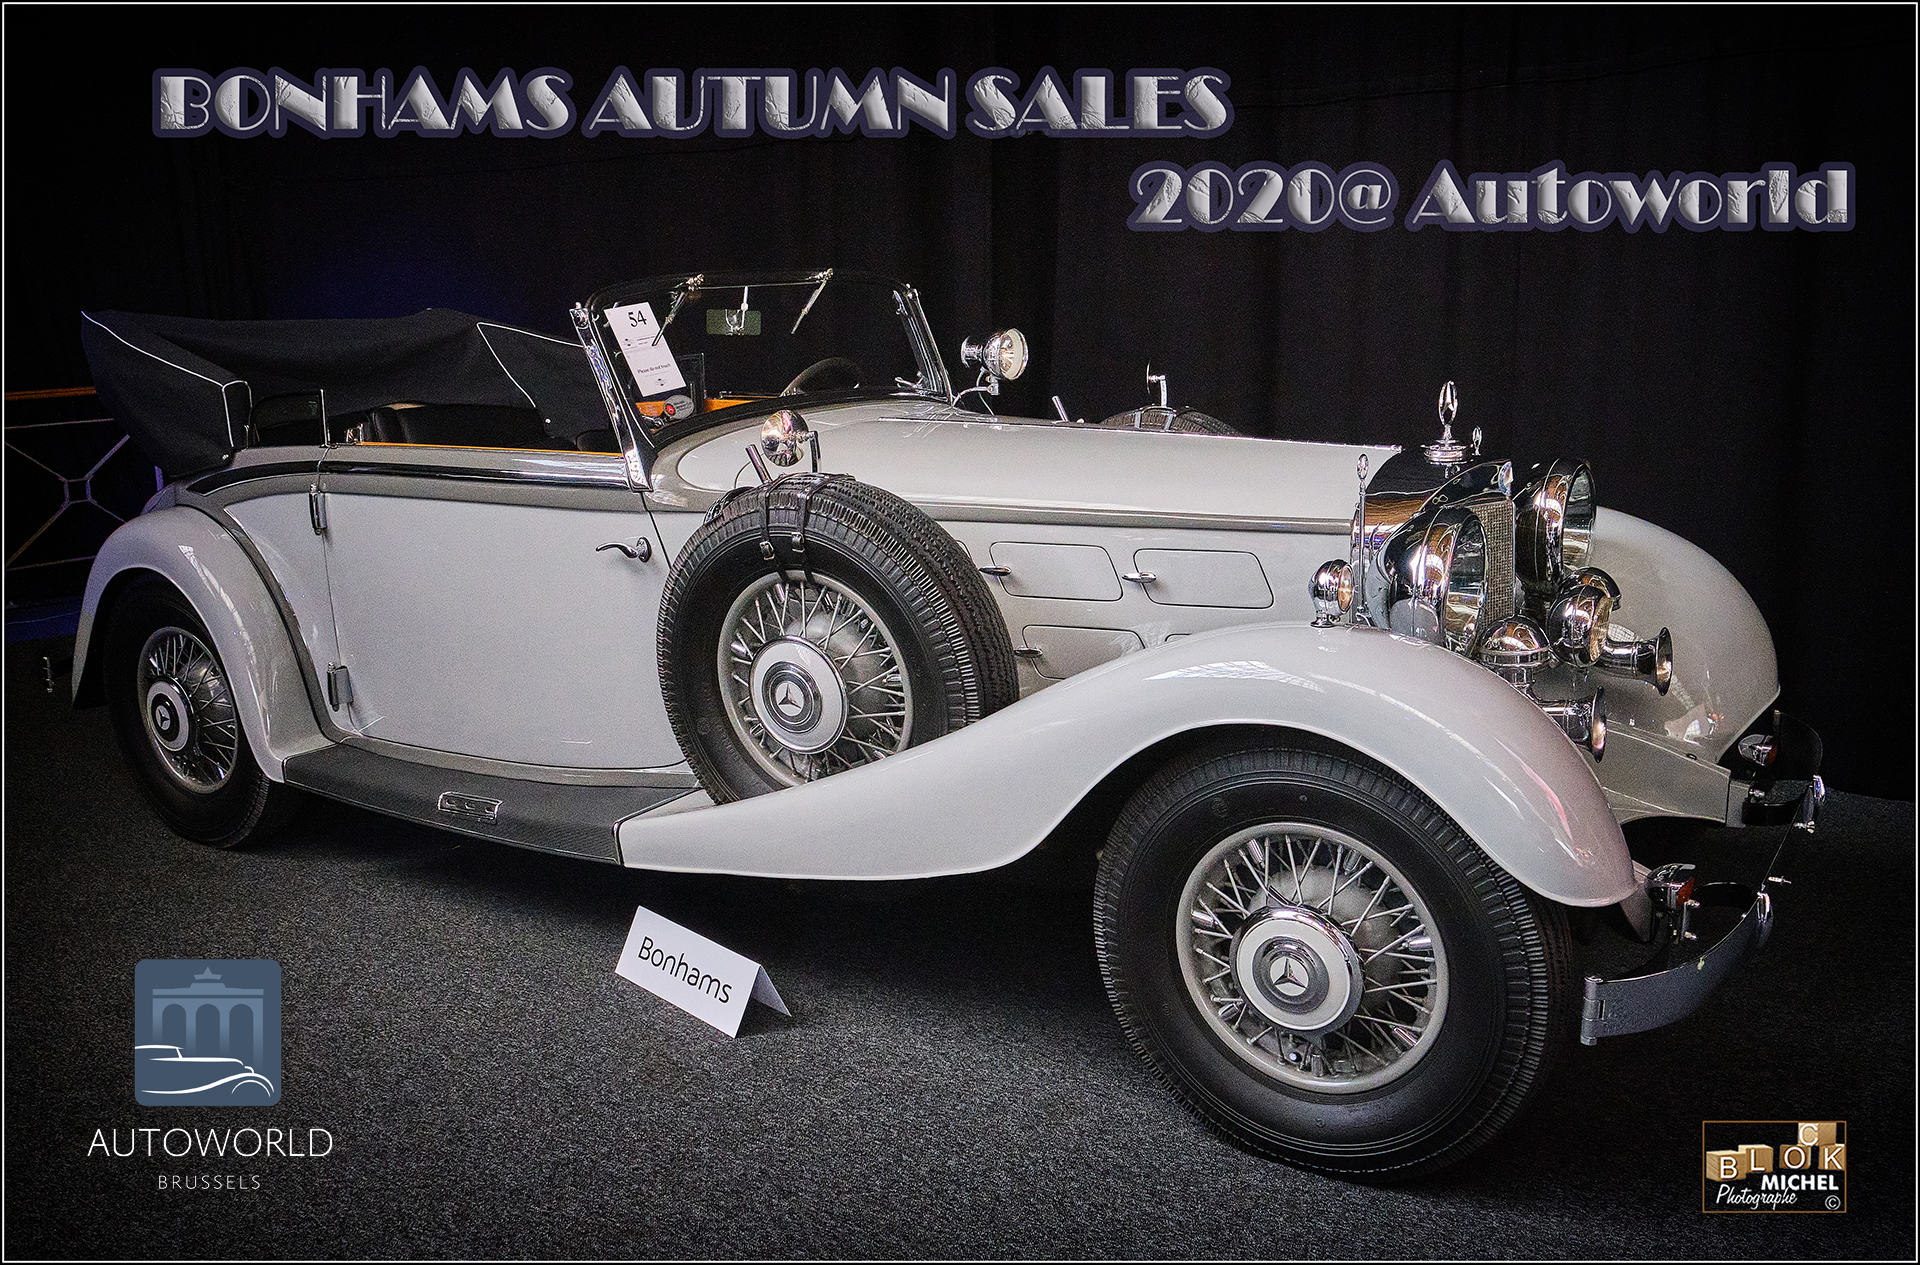 Bonhams Autumn Sales @ Autoworld 09/2020